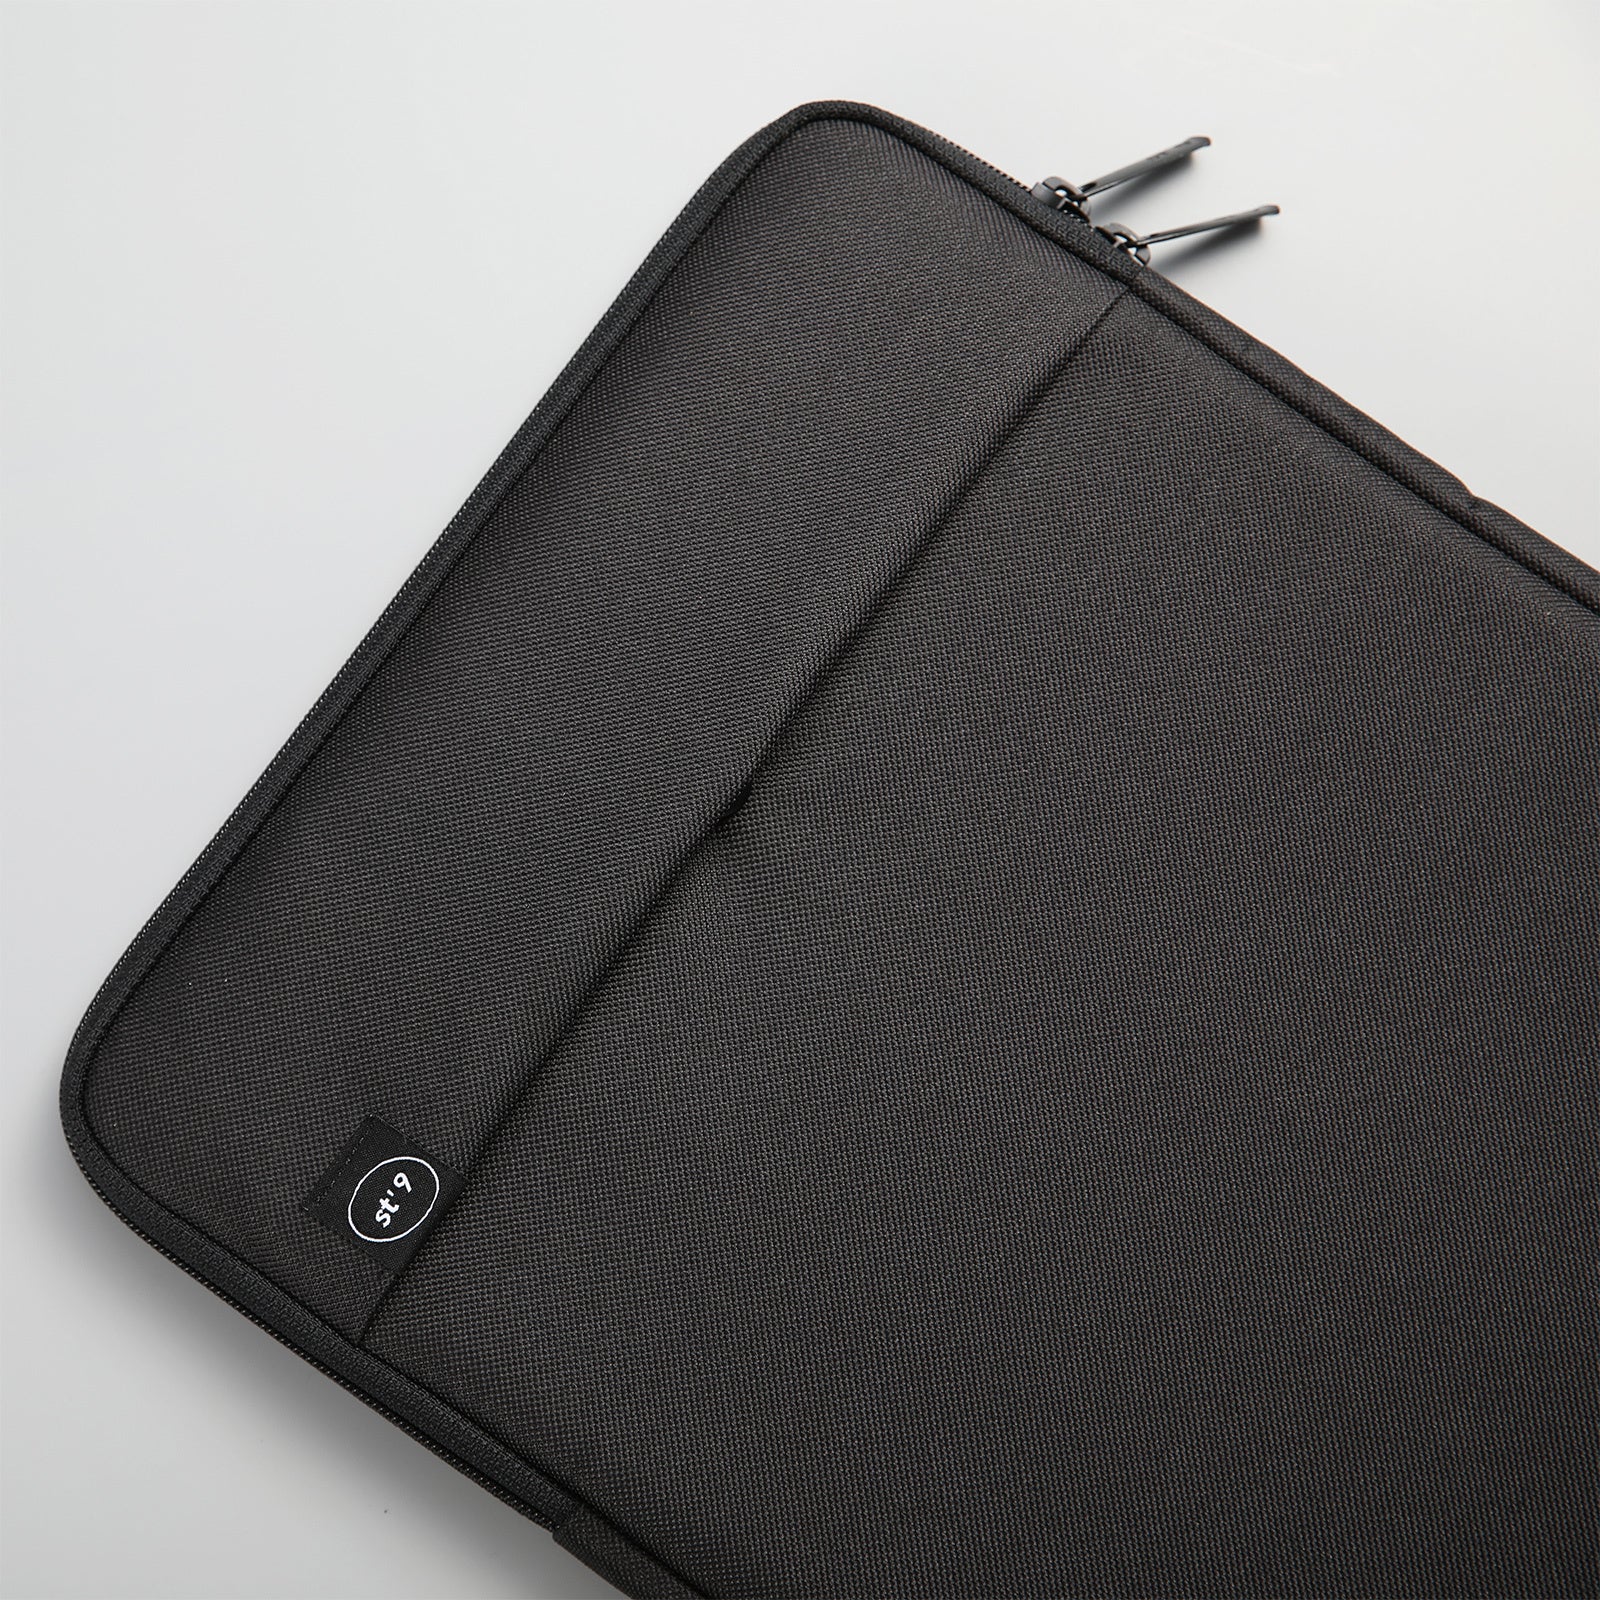 ST'9 XL size 15.6/16 inch Black Laptop Sleeve Padded Travel Carry Case Bag LUKE